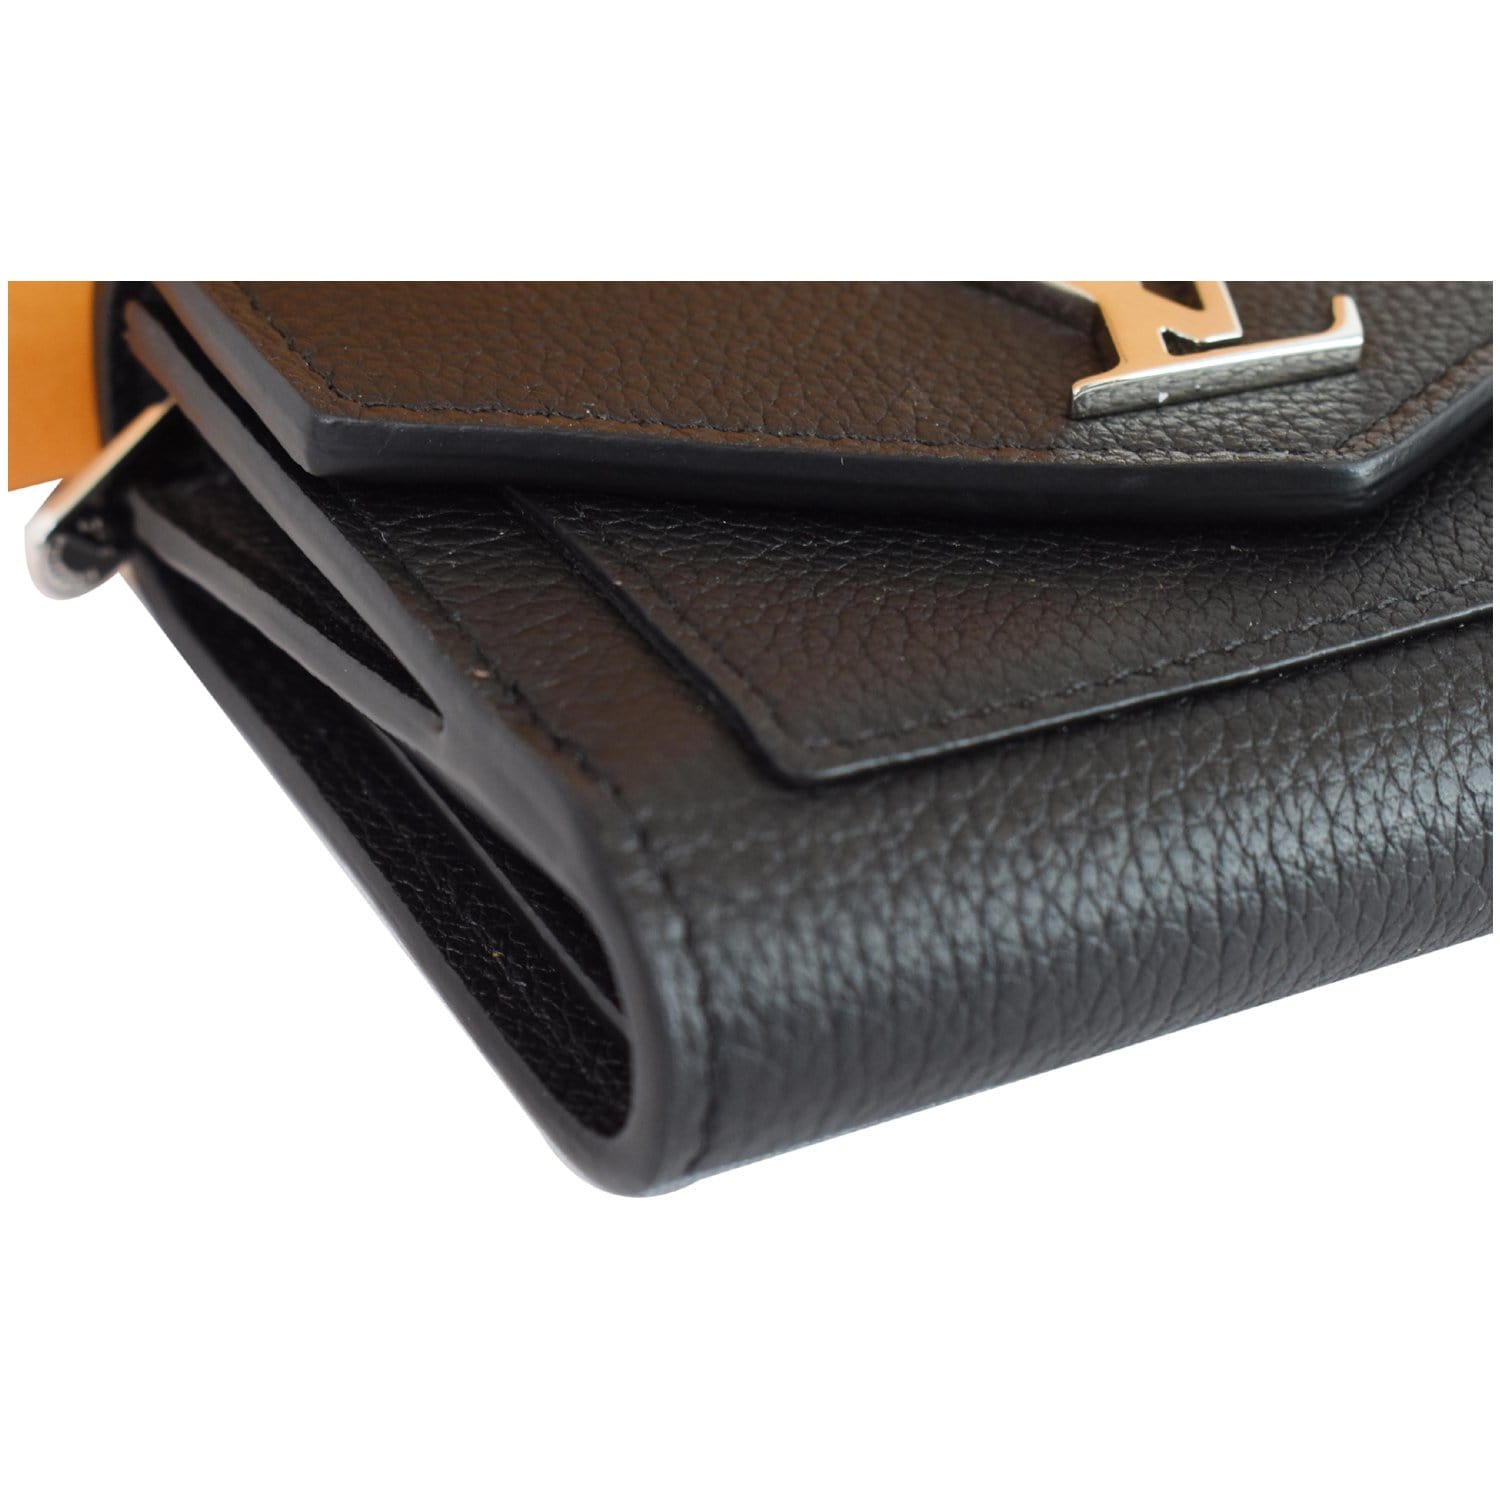 LOUIS VUITTON Soft Calfskin My Lockme Compact Wallet Black 426885